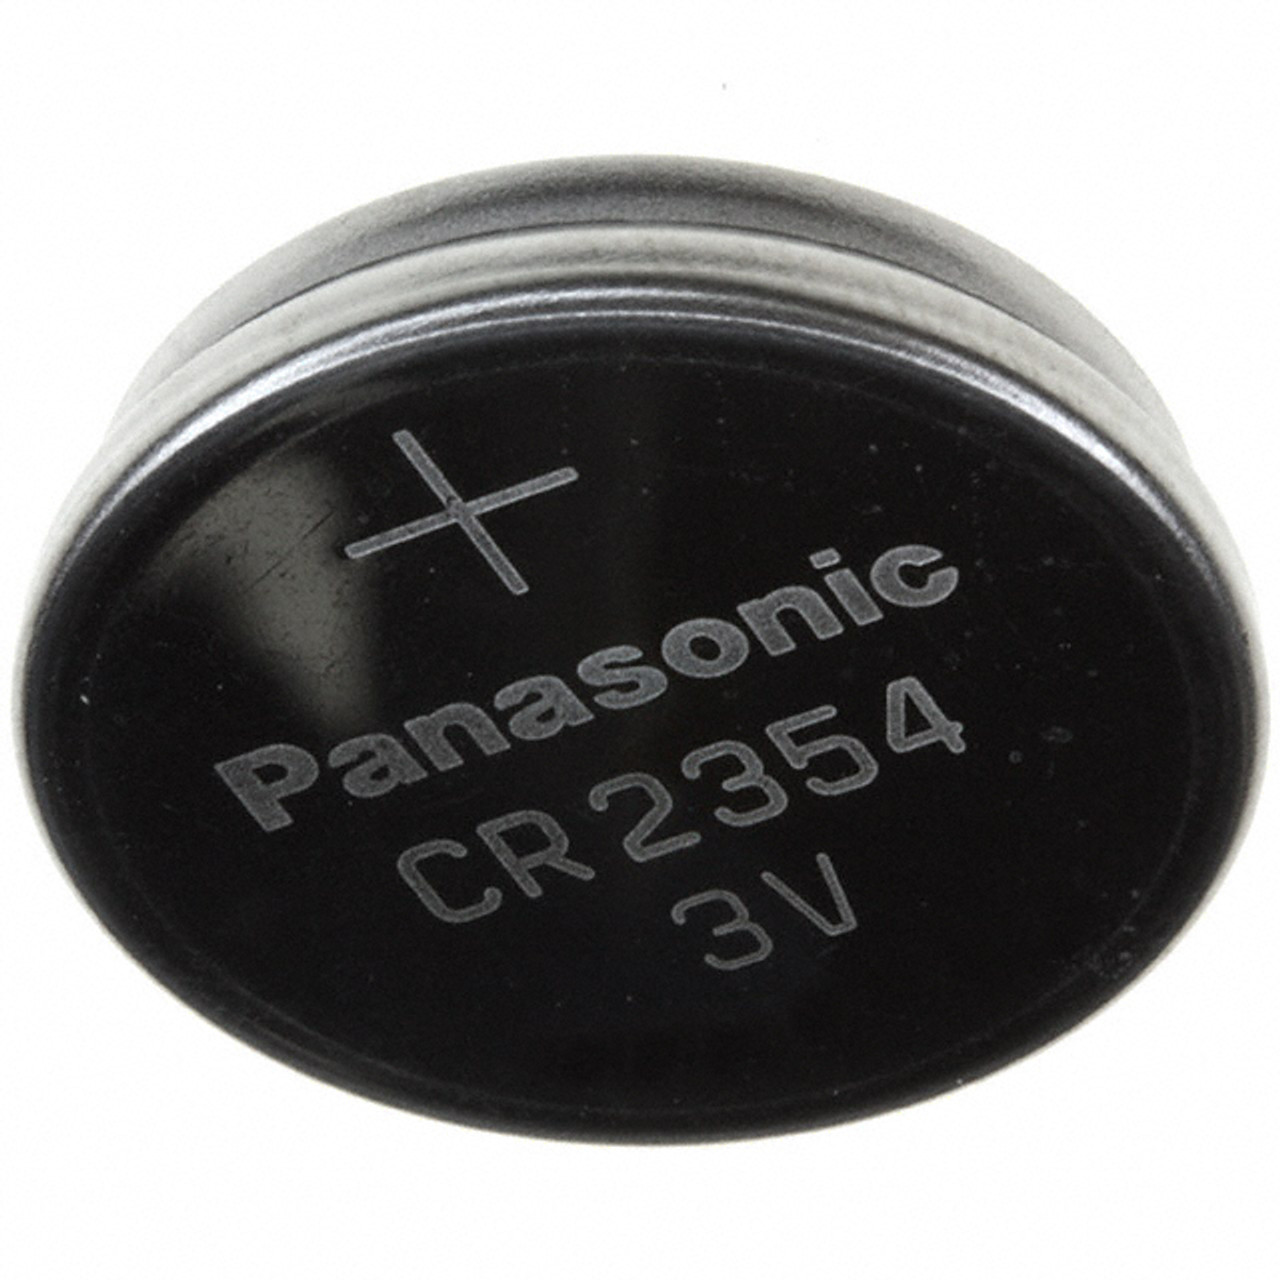 zeemijl Aap NieuwZeeland Panasonic CR2354 Battery - 3V Lithium Coin Cell